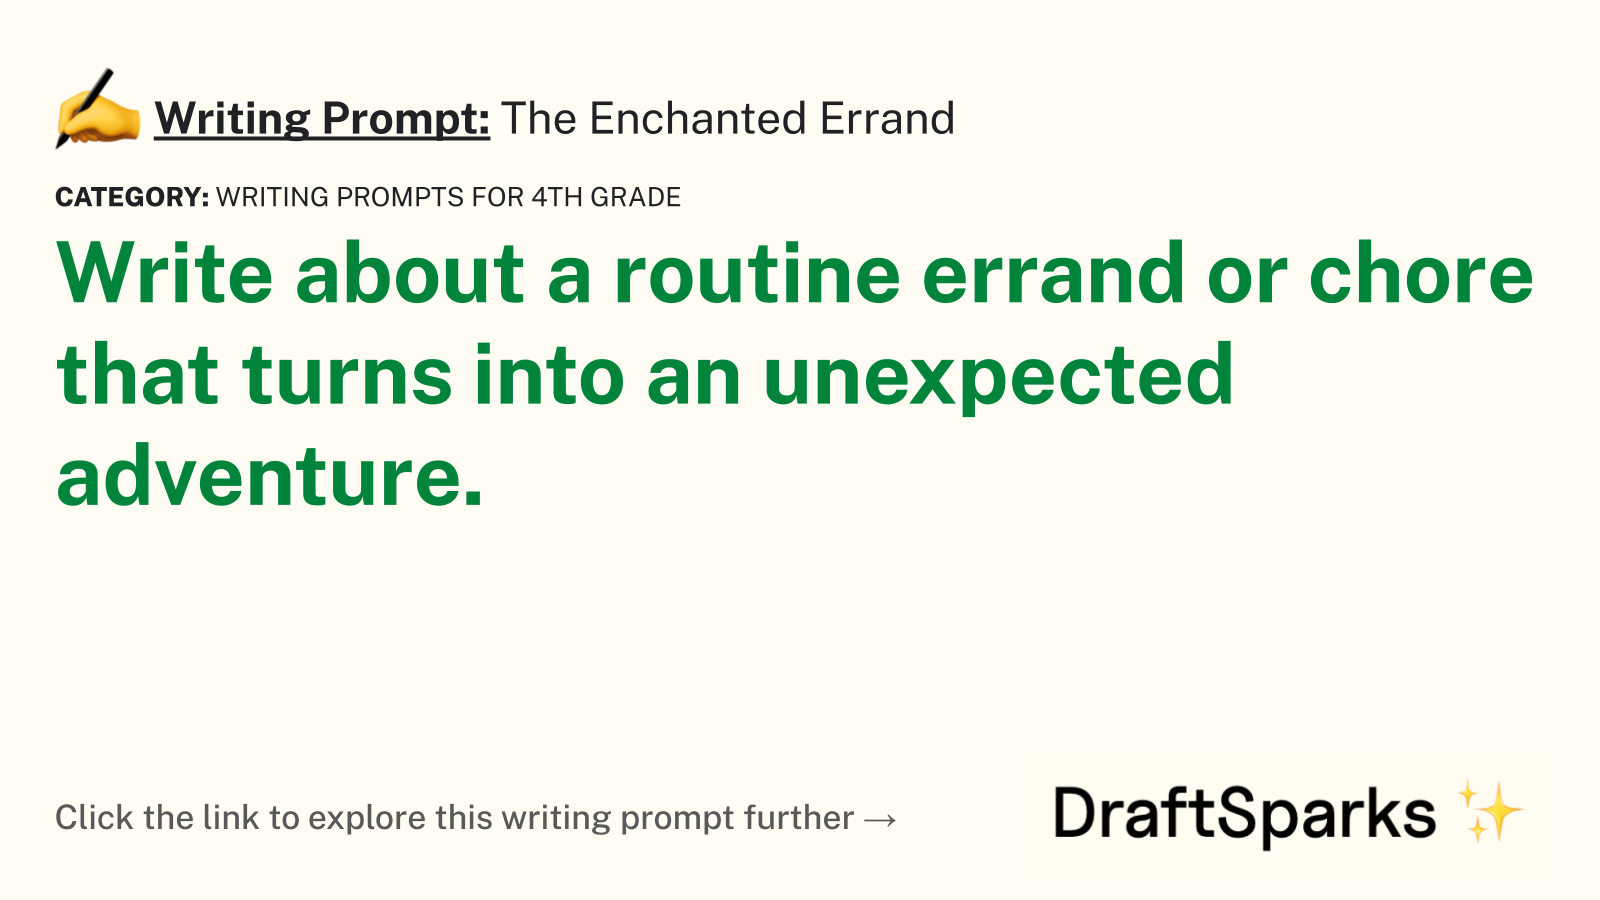 The Enchanted Errand